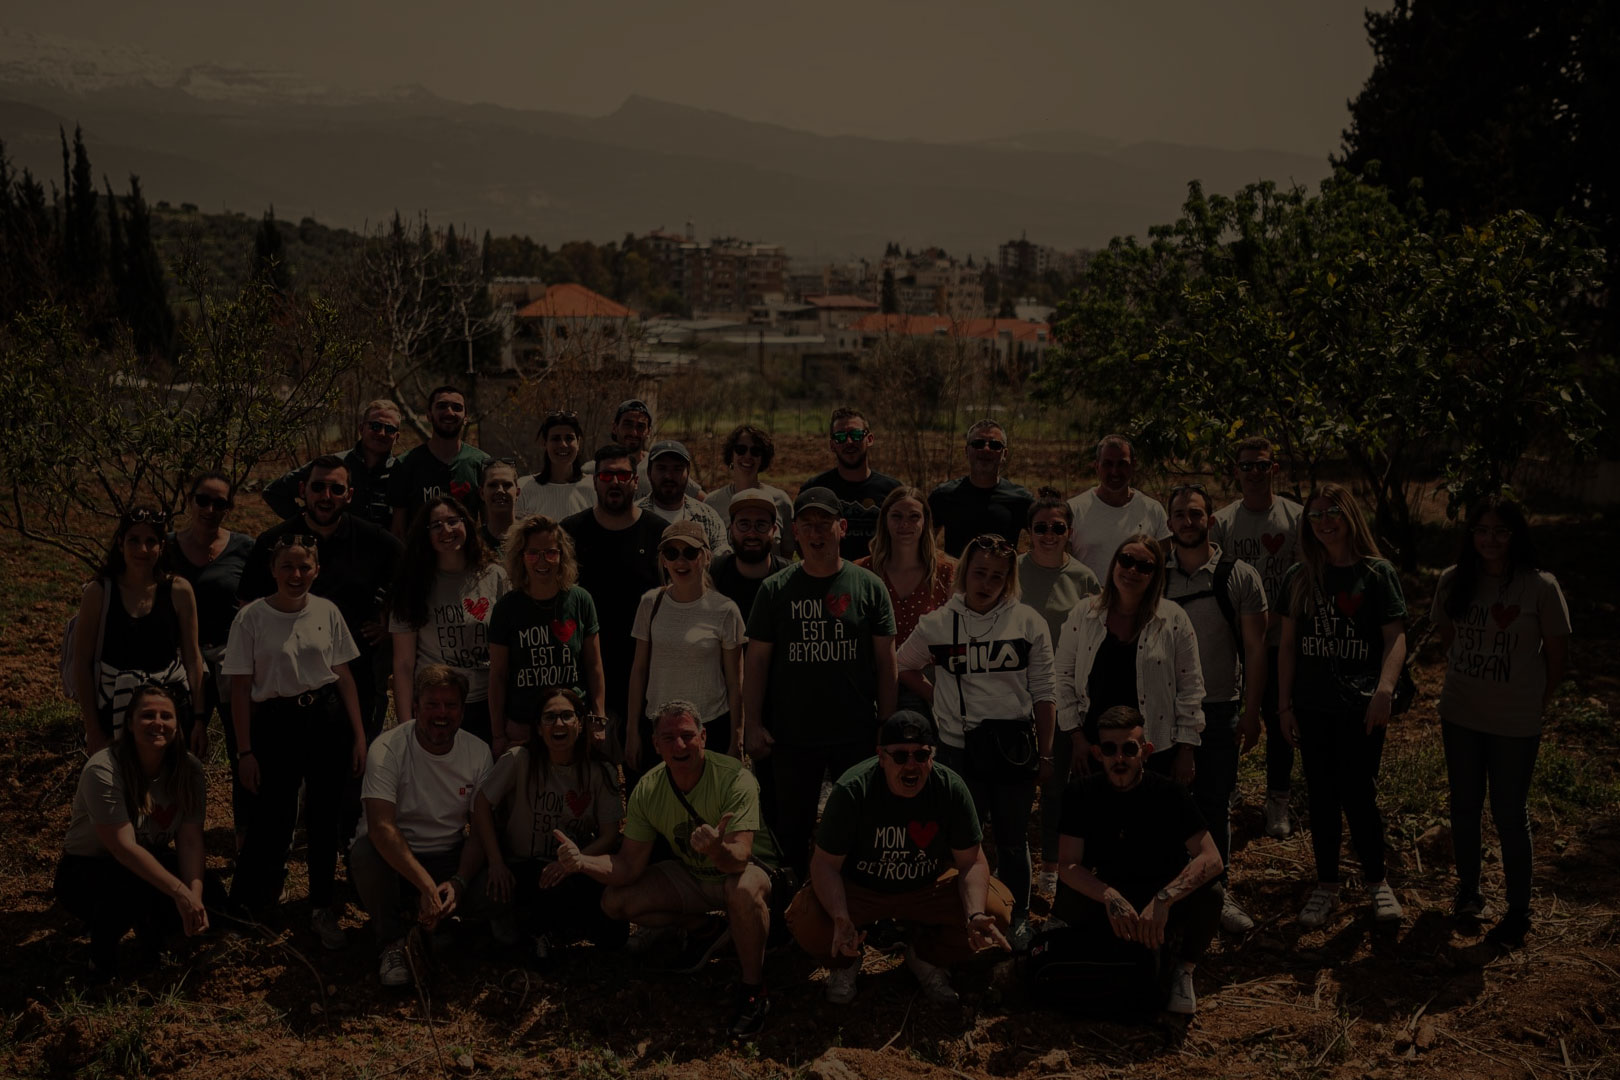 Equipe du Cèdre Solidarity en action humanitaire à Beyrouth